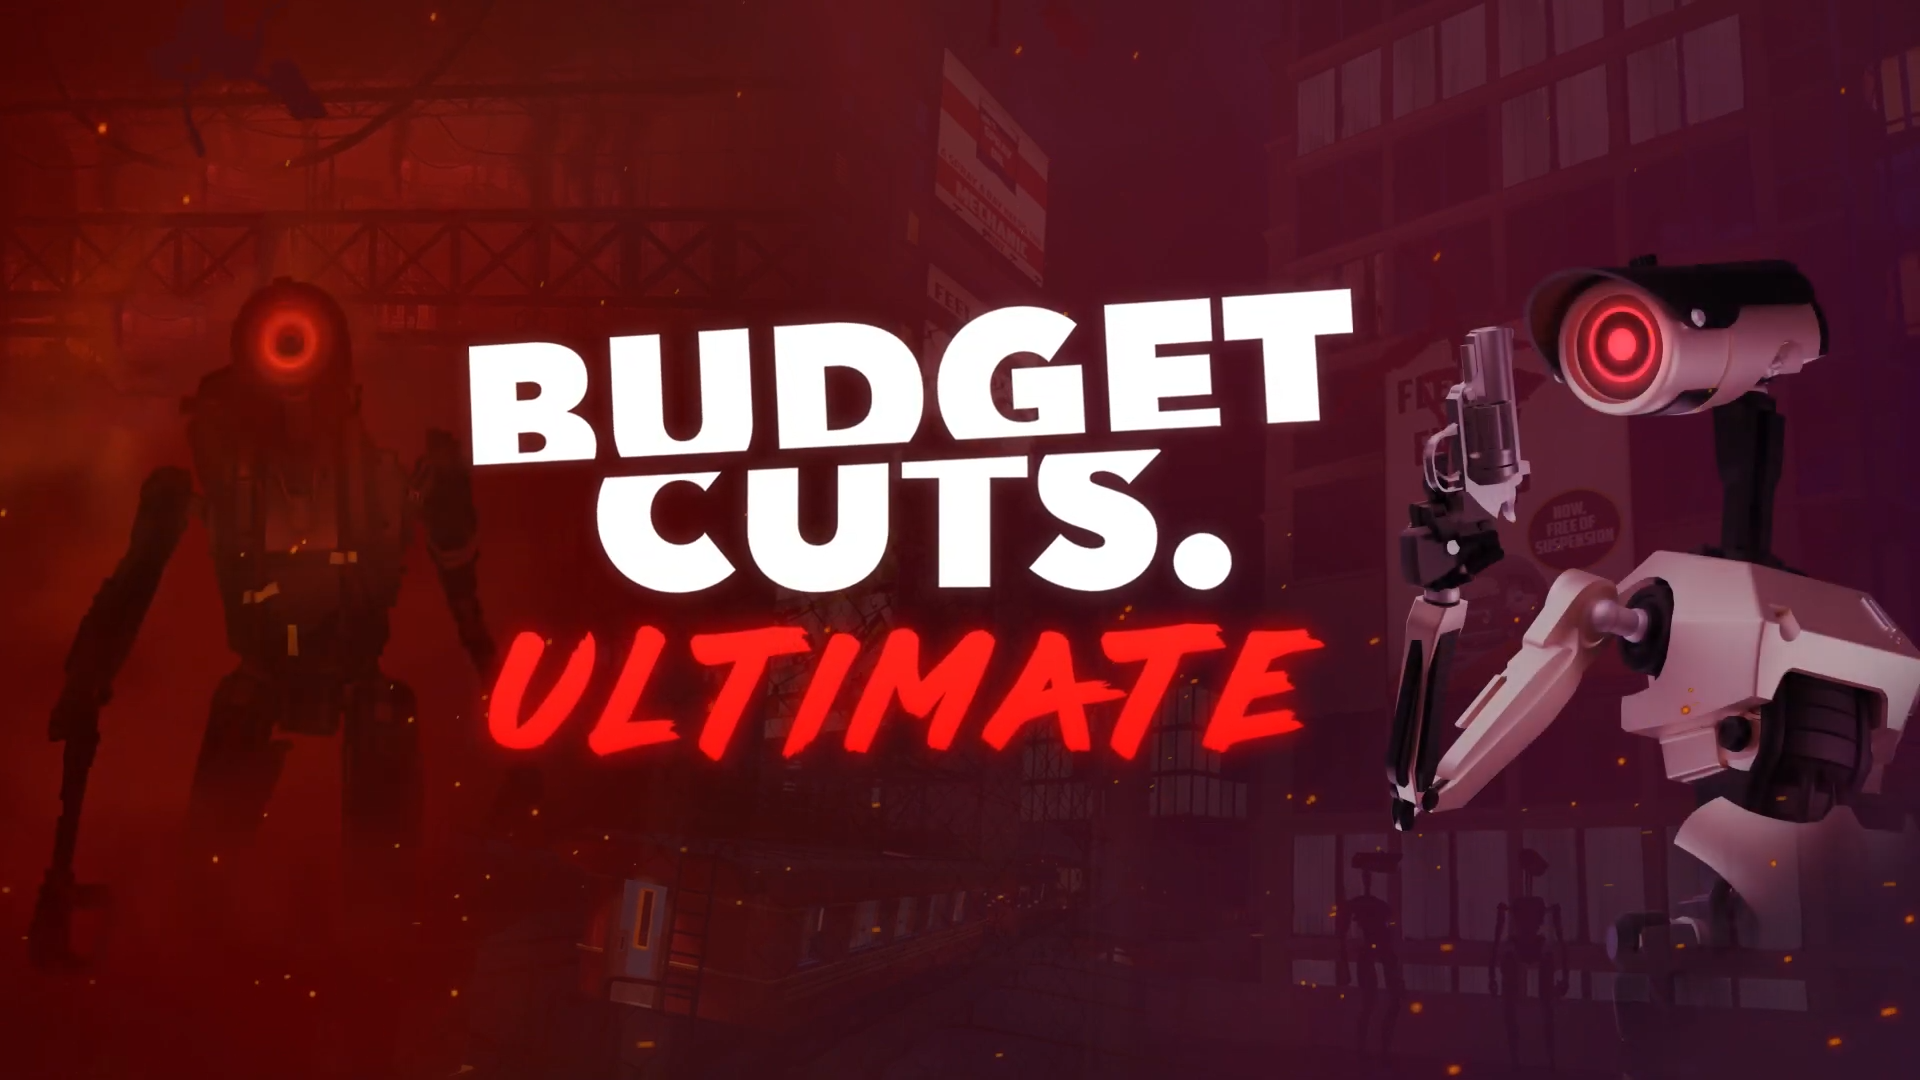 Budget Cuts 2 VR. Budget Cuts 2 игра. Budget Cuts Ultimate.